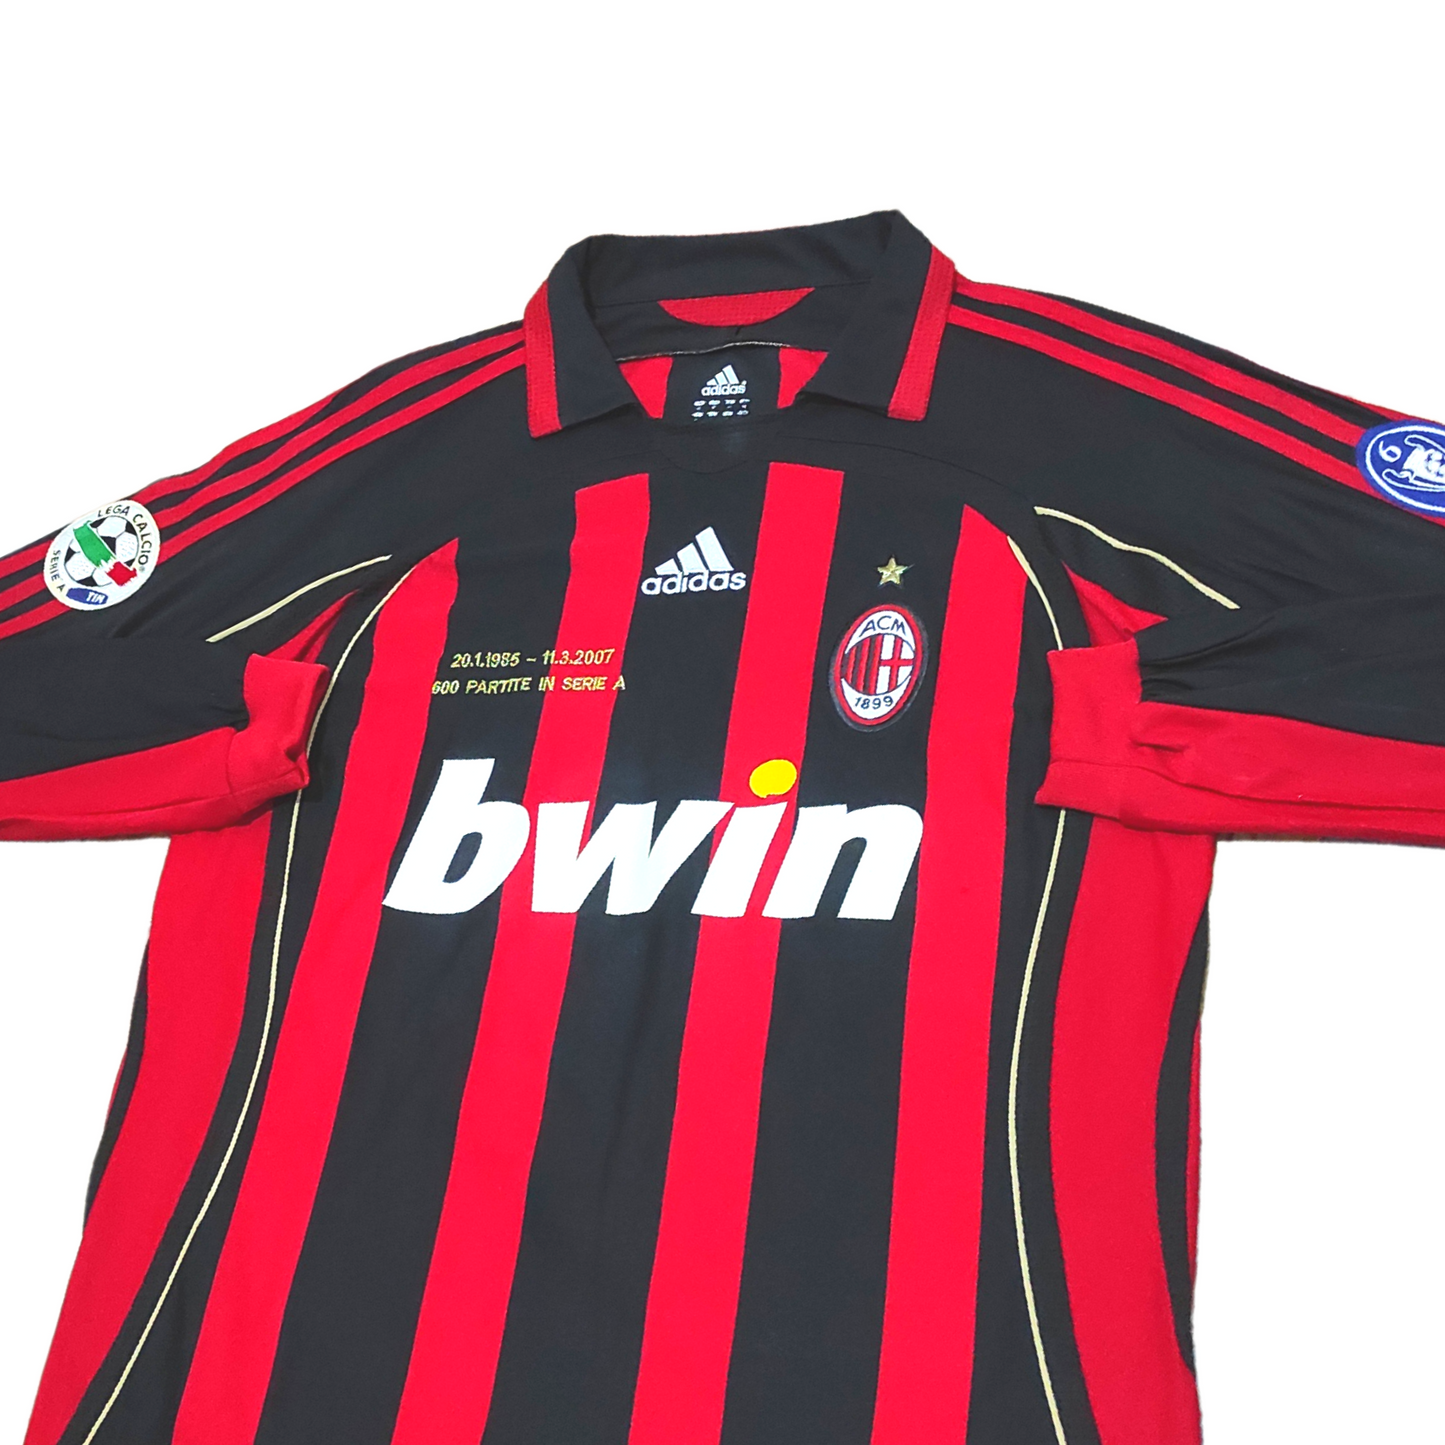 Milan Home Shirt 2006-2007 Maldini (M)